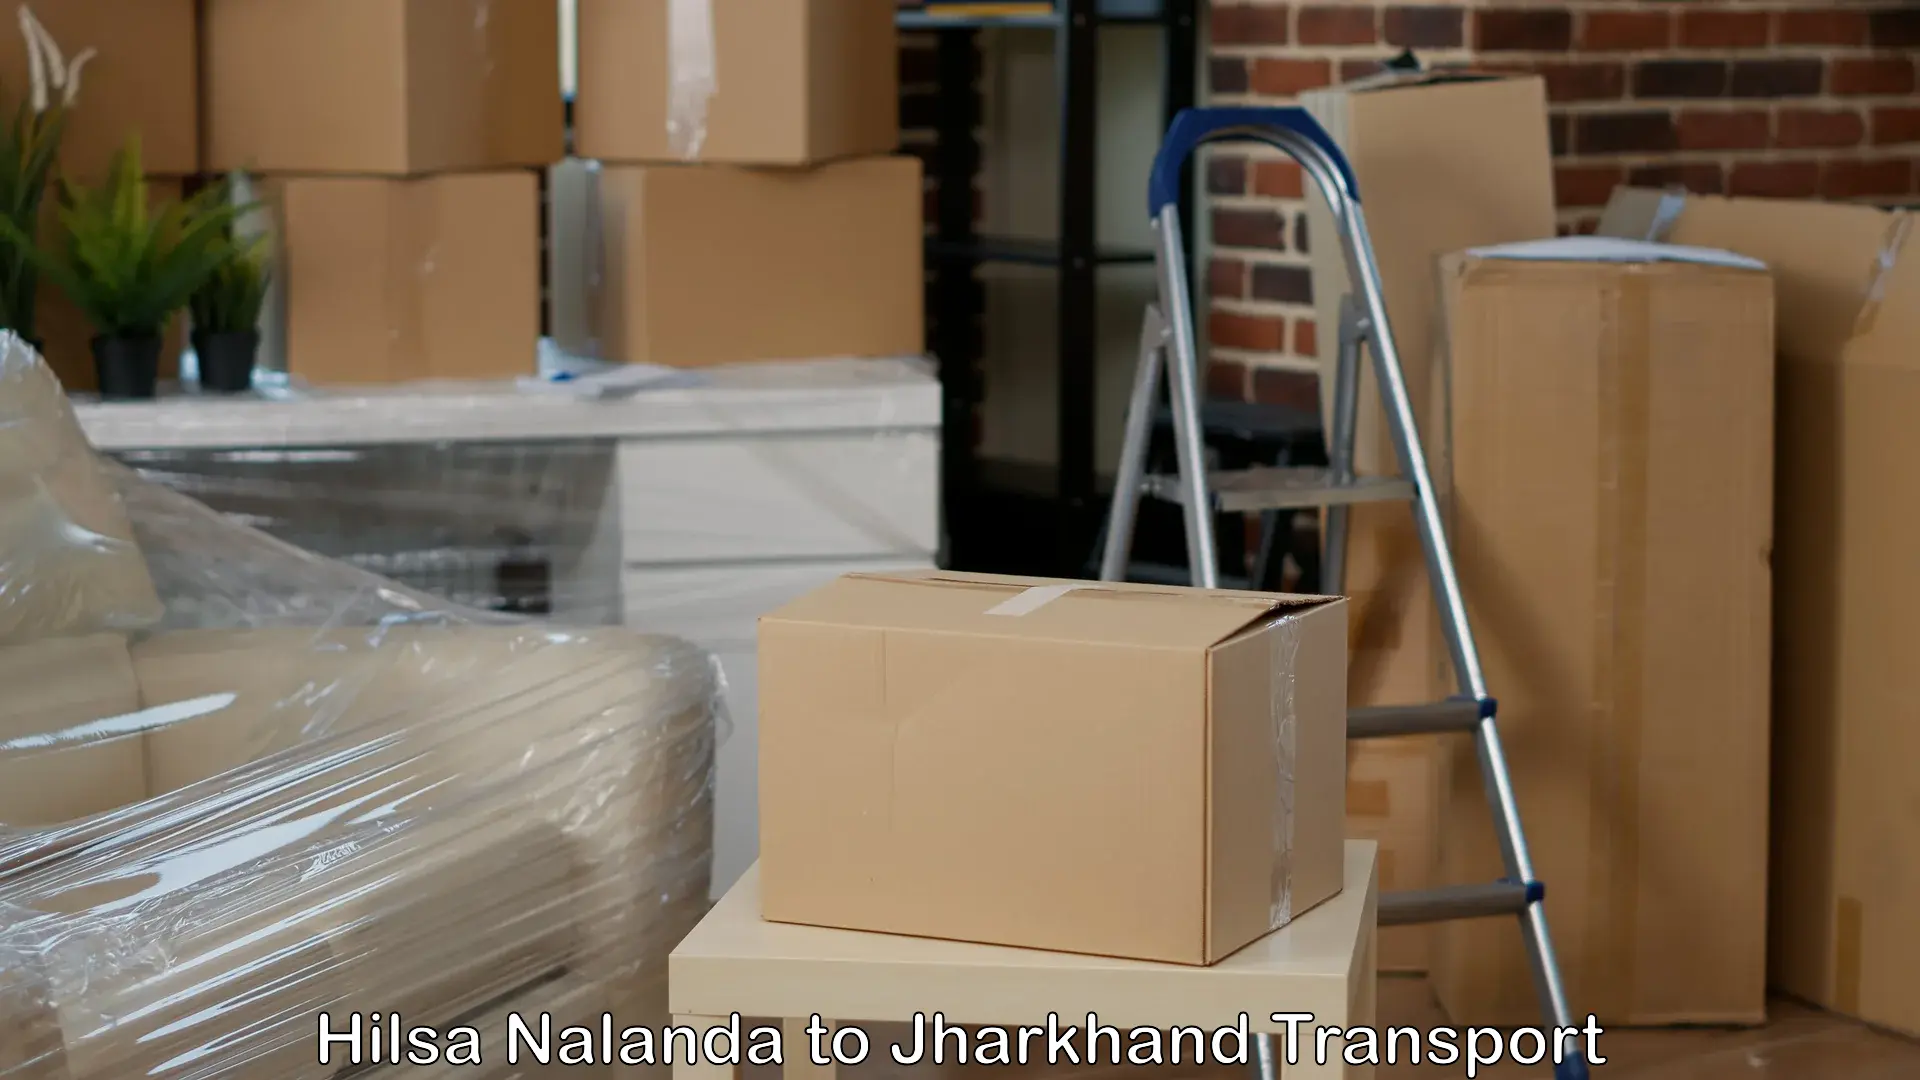 Transport in sharing Hilsa Nalanda to Domchanch